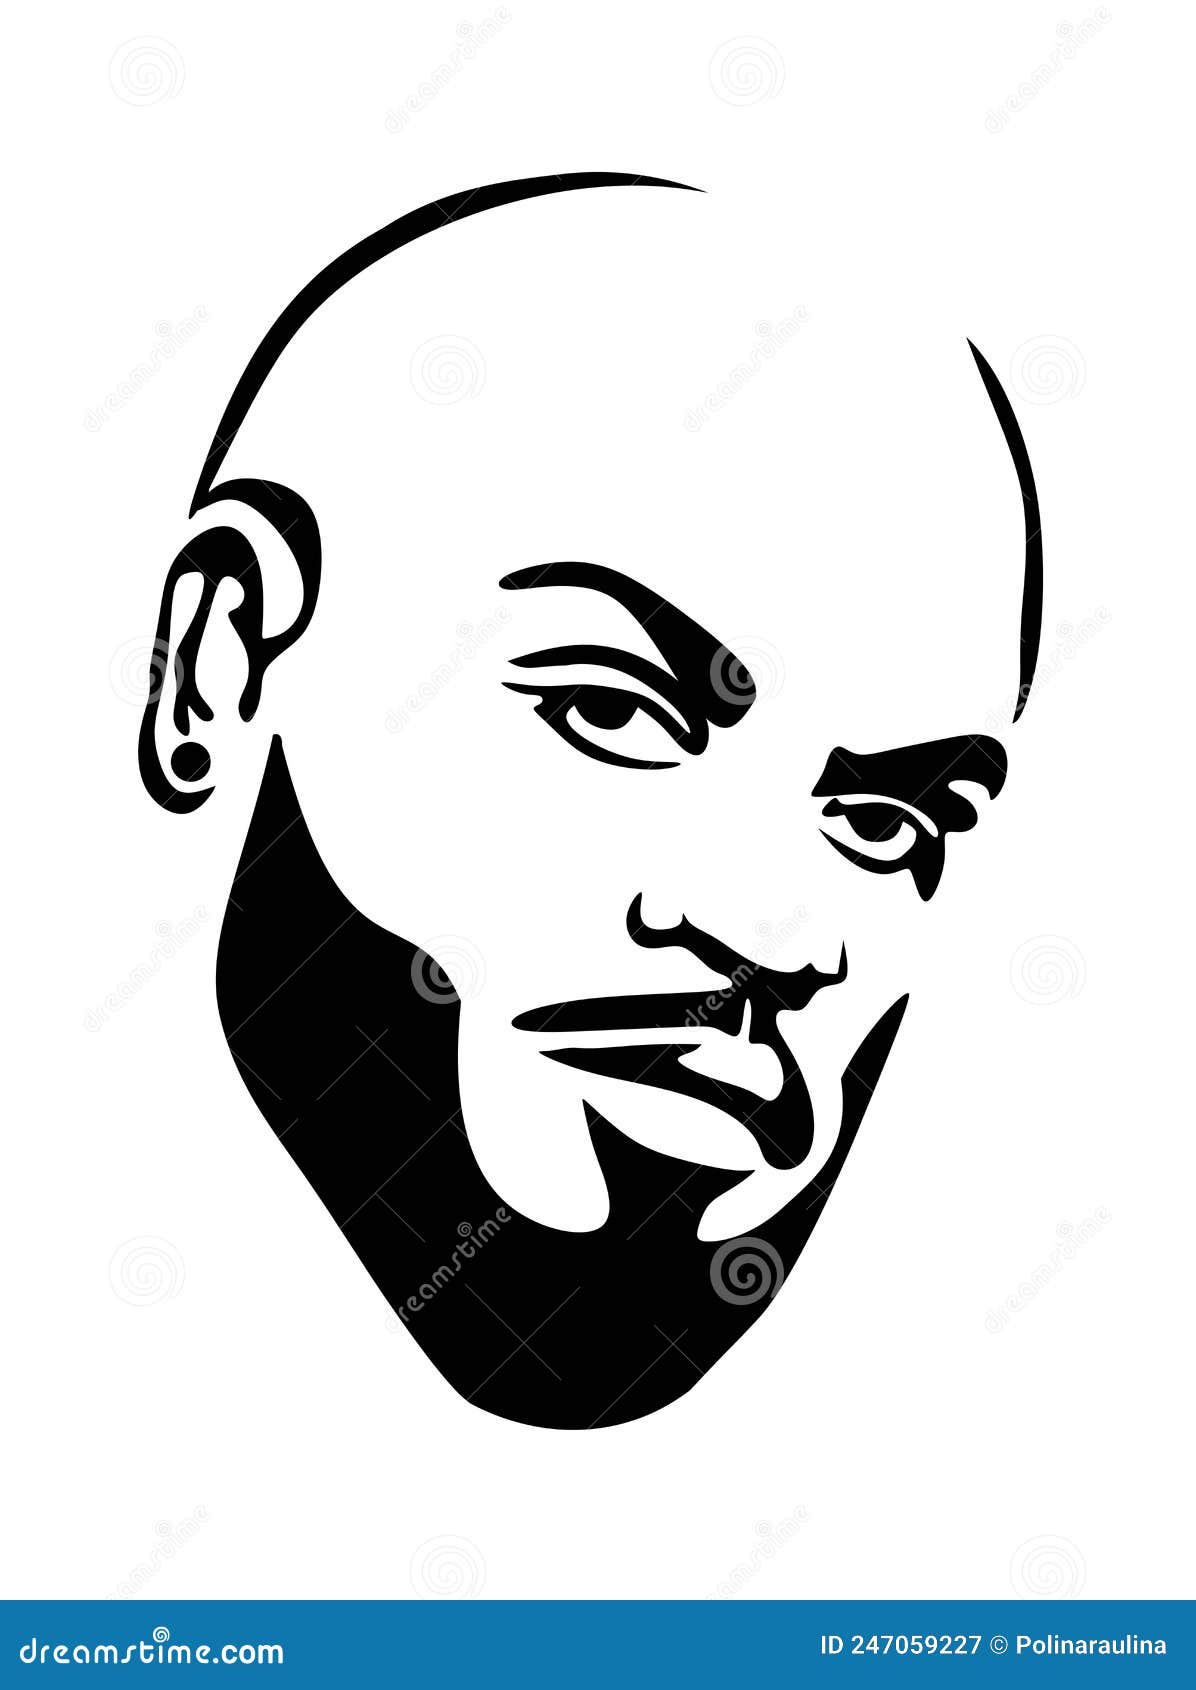 16,300+ Black Bald Man Stock Photos, Pictures & Royalty-Free Images -  iStock | Black bald man portrait